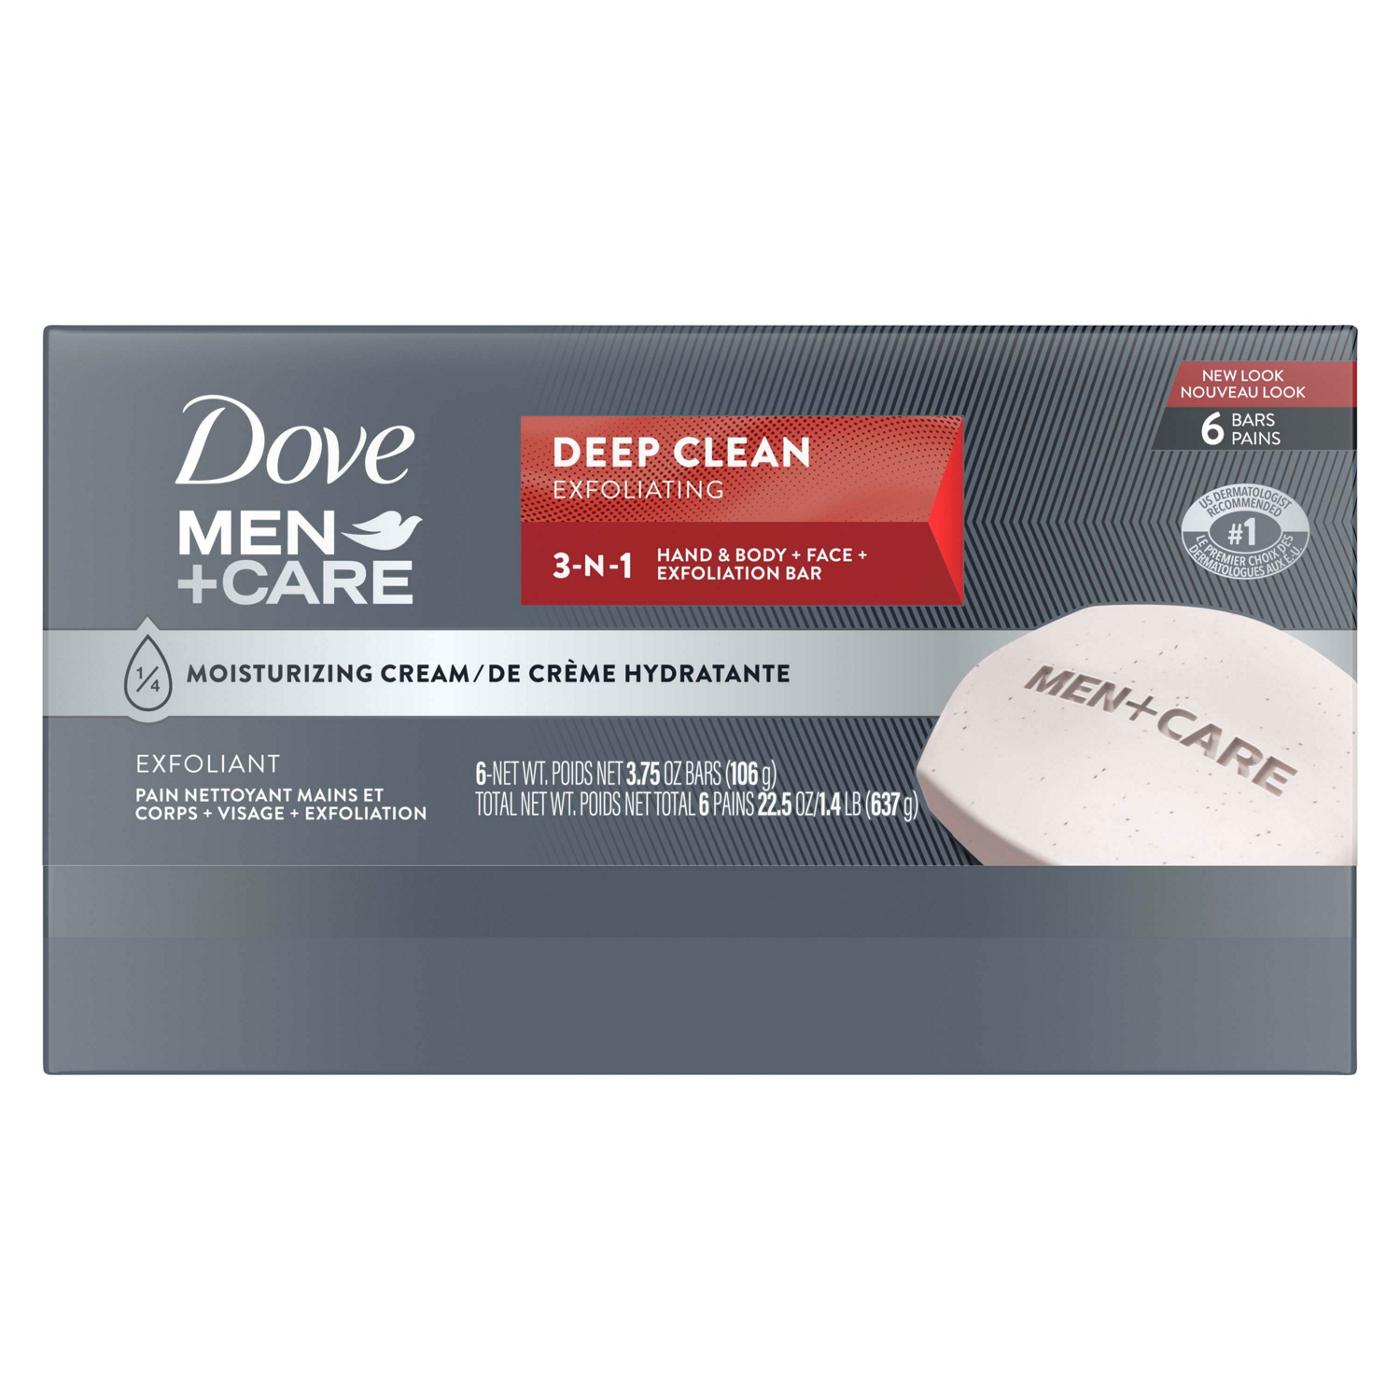 Dove Men+Care Deep Clean Body Soap and Face Bar 4 oz, Bar Soap & Body Wash